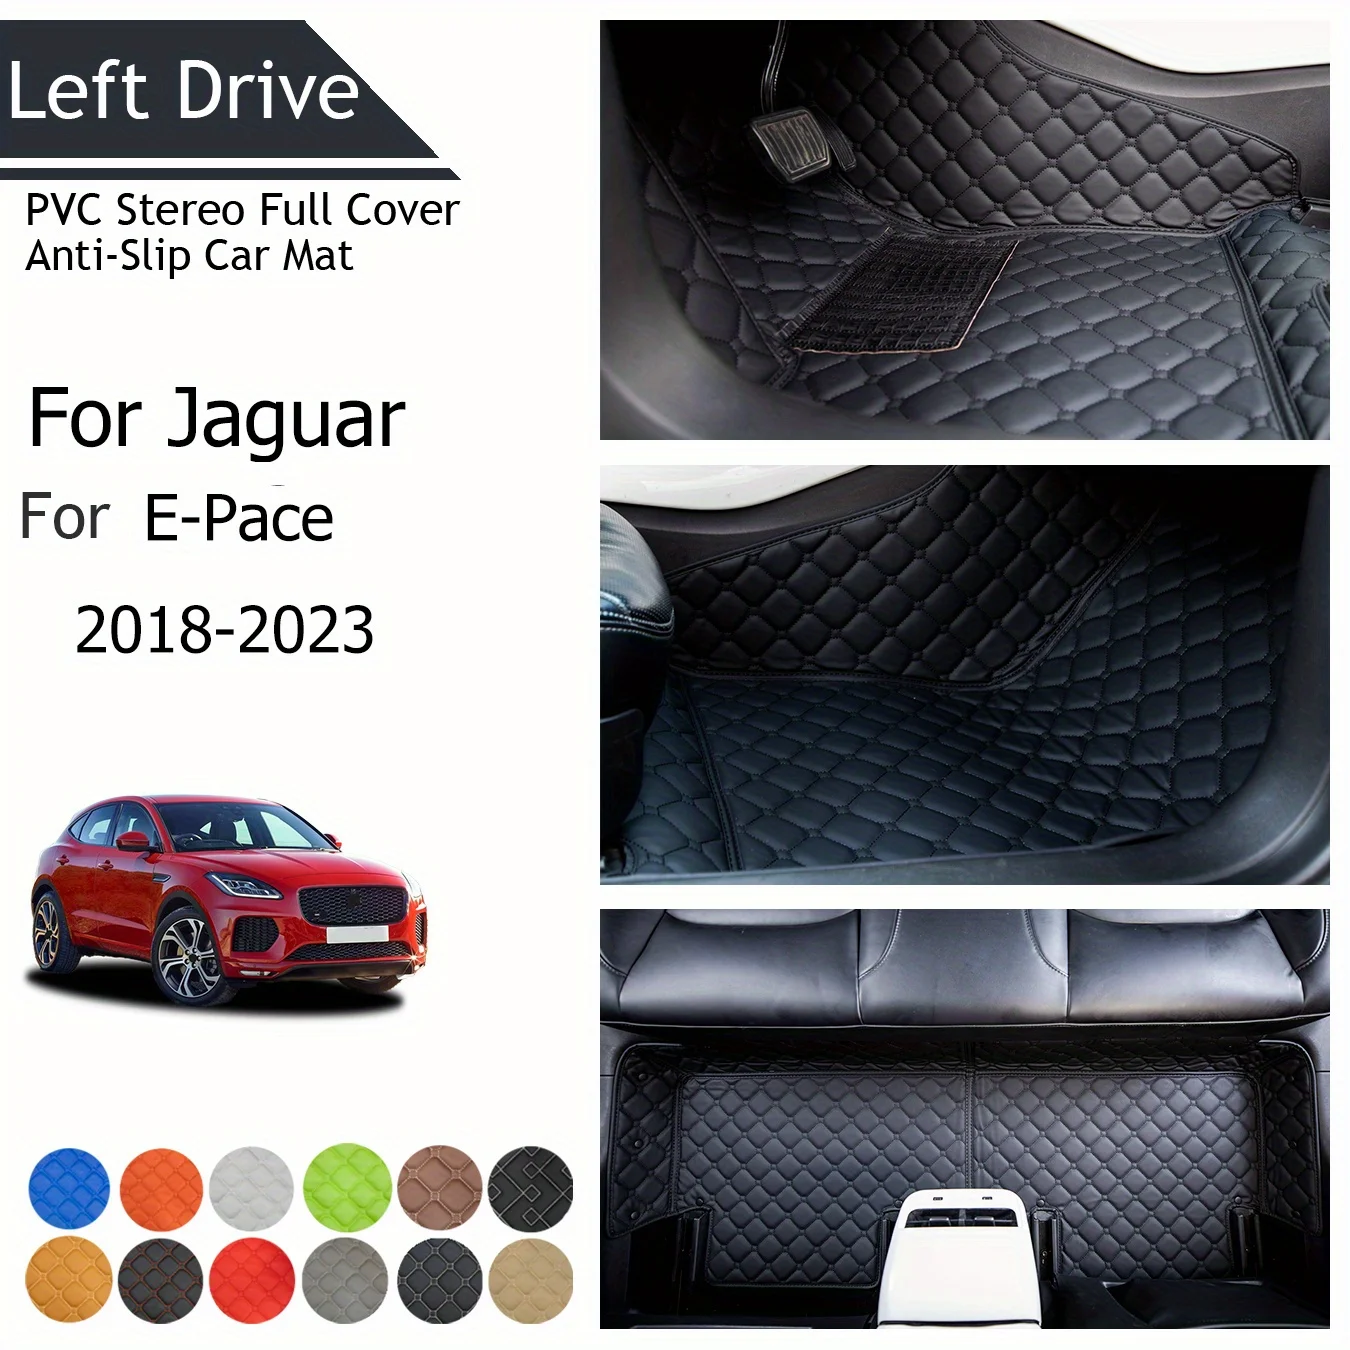 

TEGART 【LHD】For Jaguar For E-Pace 2018-2023 Three Layer PVC Stereo Full Cover Anti-Slip Car Mat Car Floor Mats Car Accessories